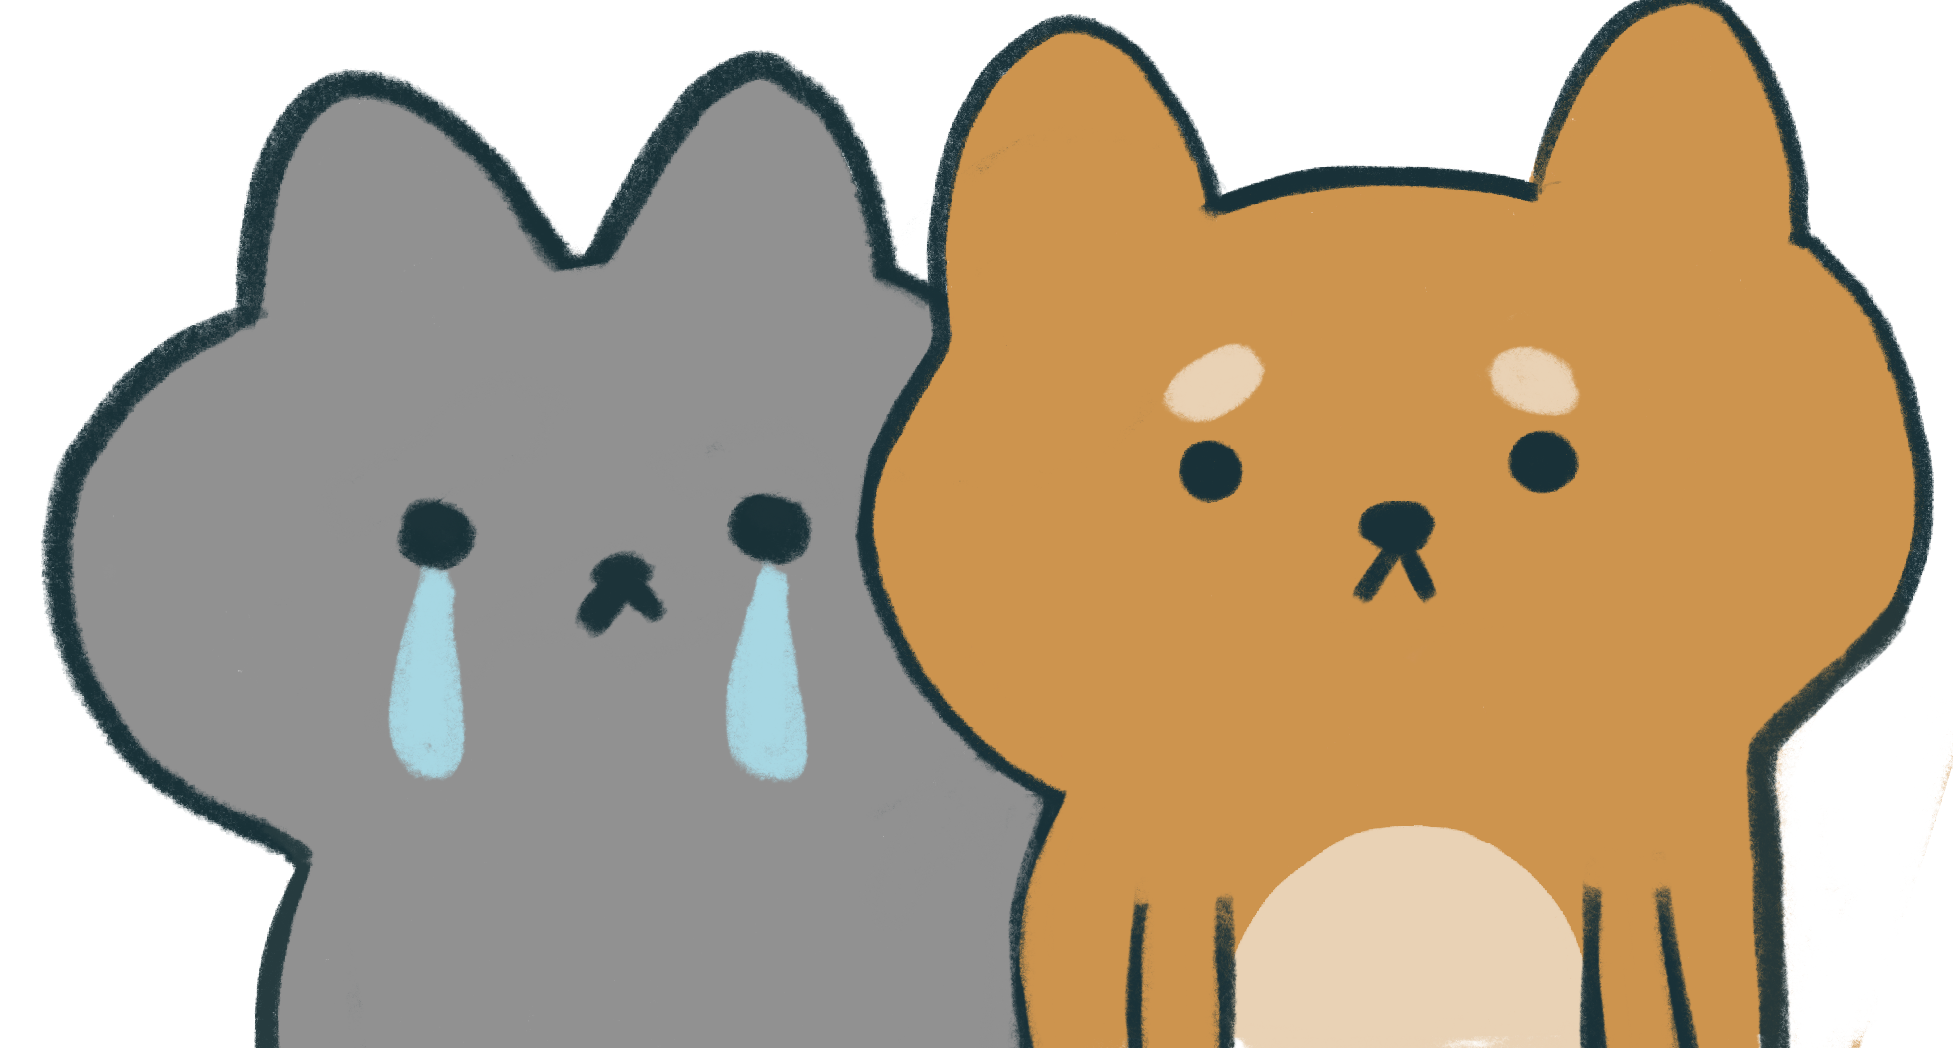 Illustration of a sad dog and cat